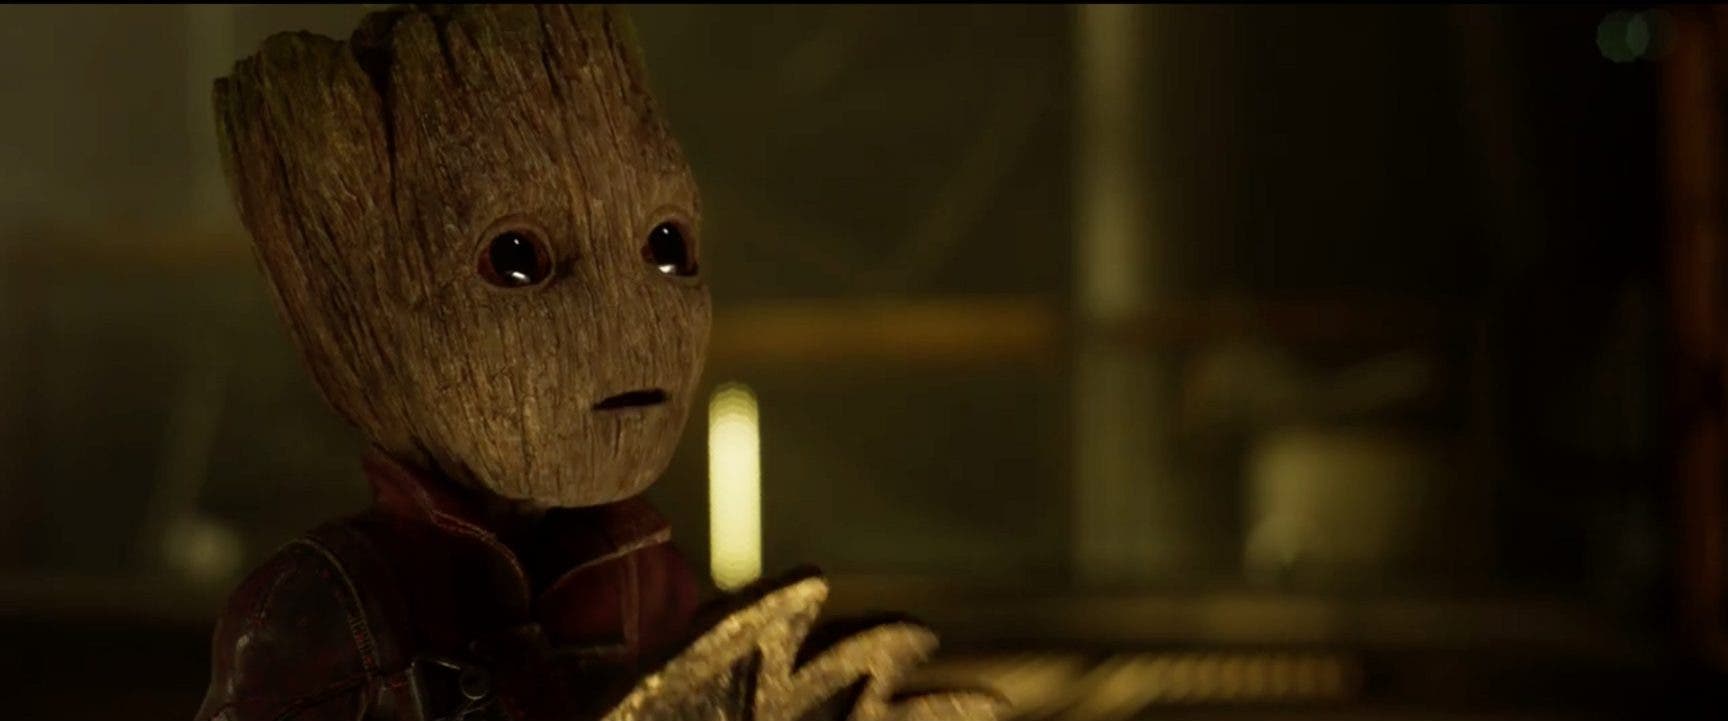 Imagen de Groot protagonista del póster de Guardianes de la Galaxia Vol. 2